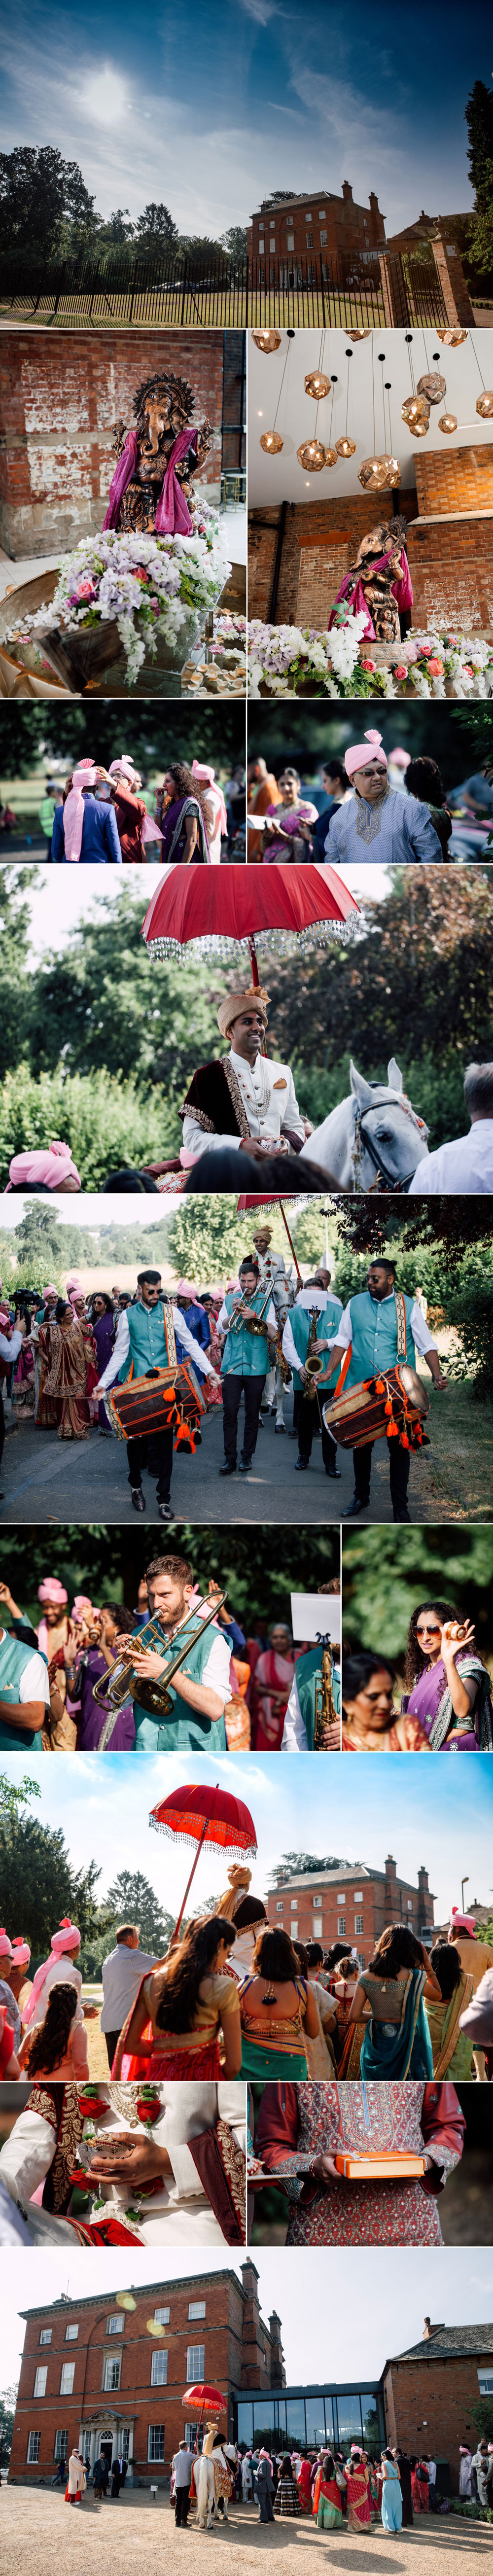 winstanley house - indian wedding photo 3